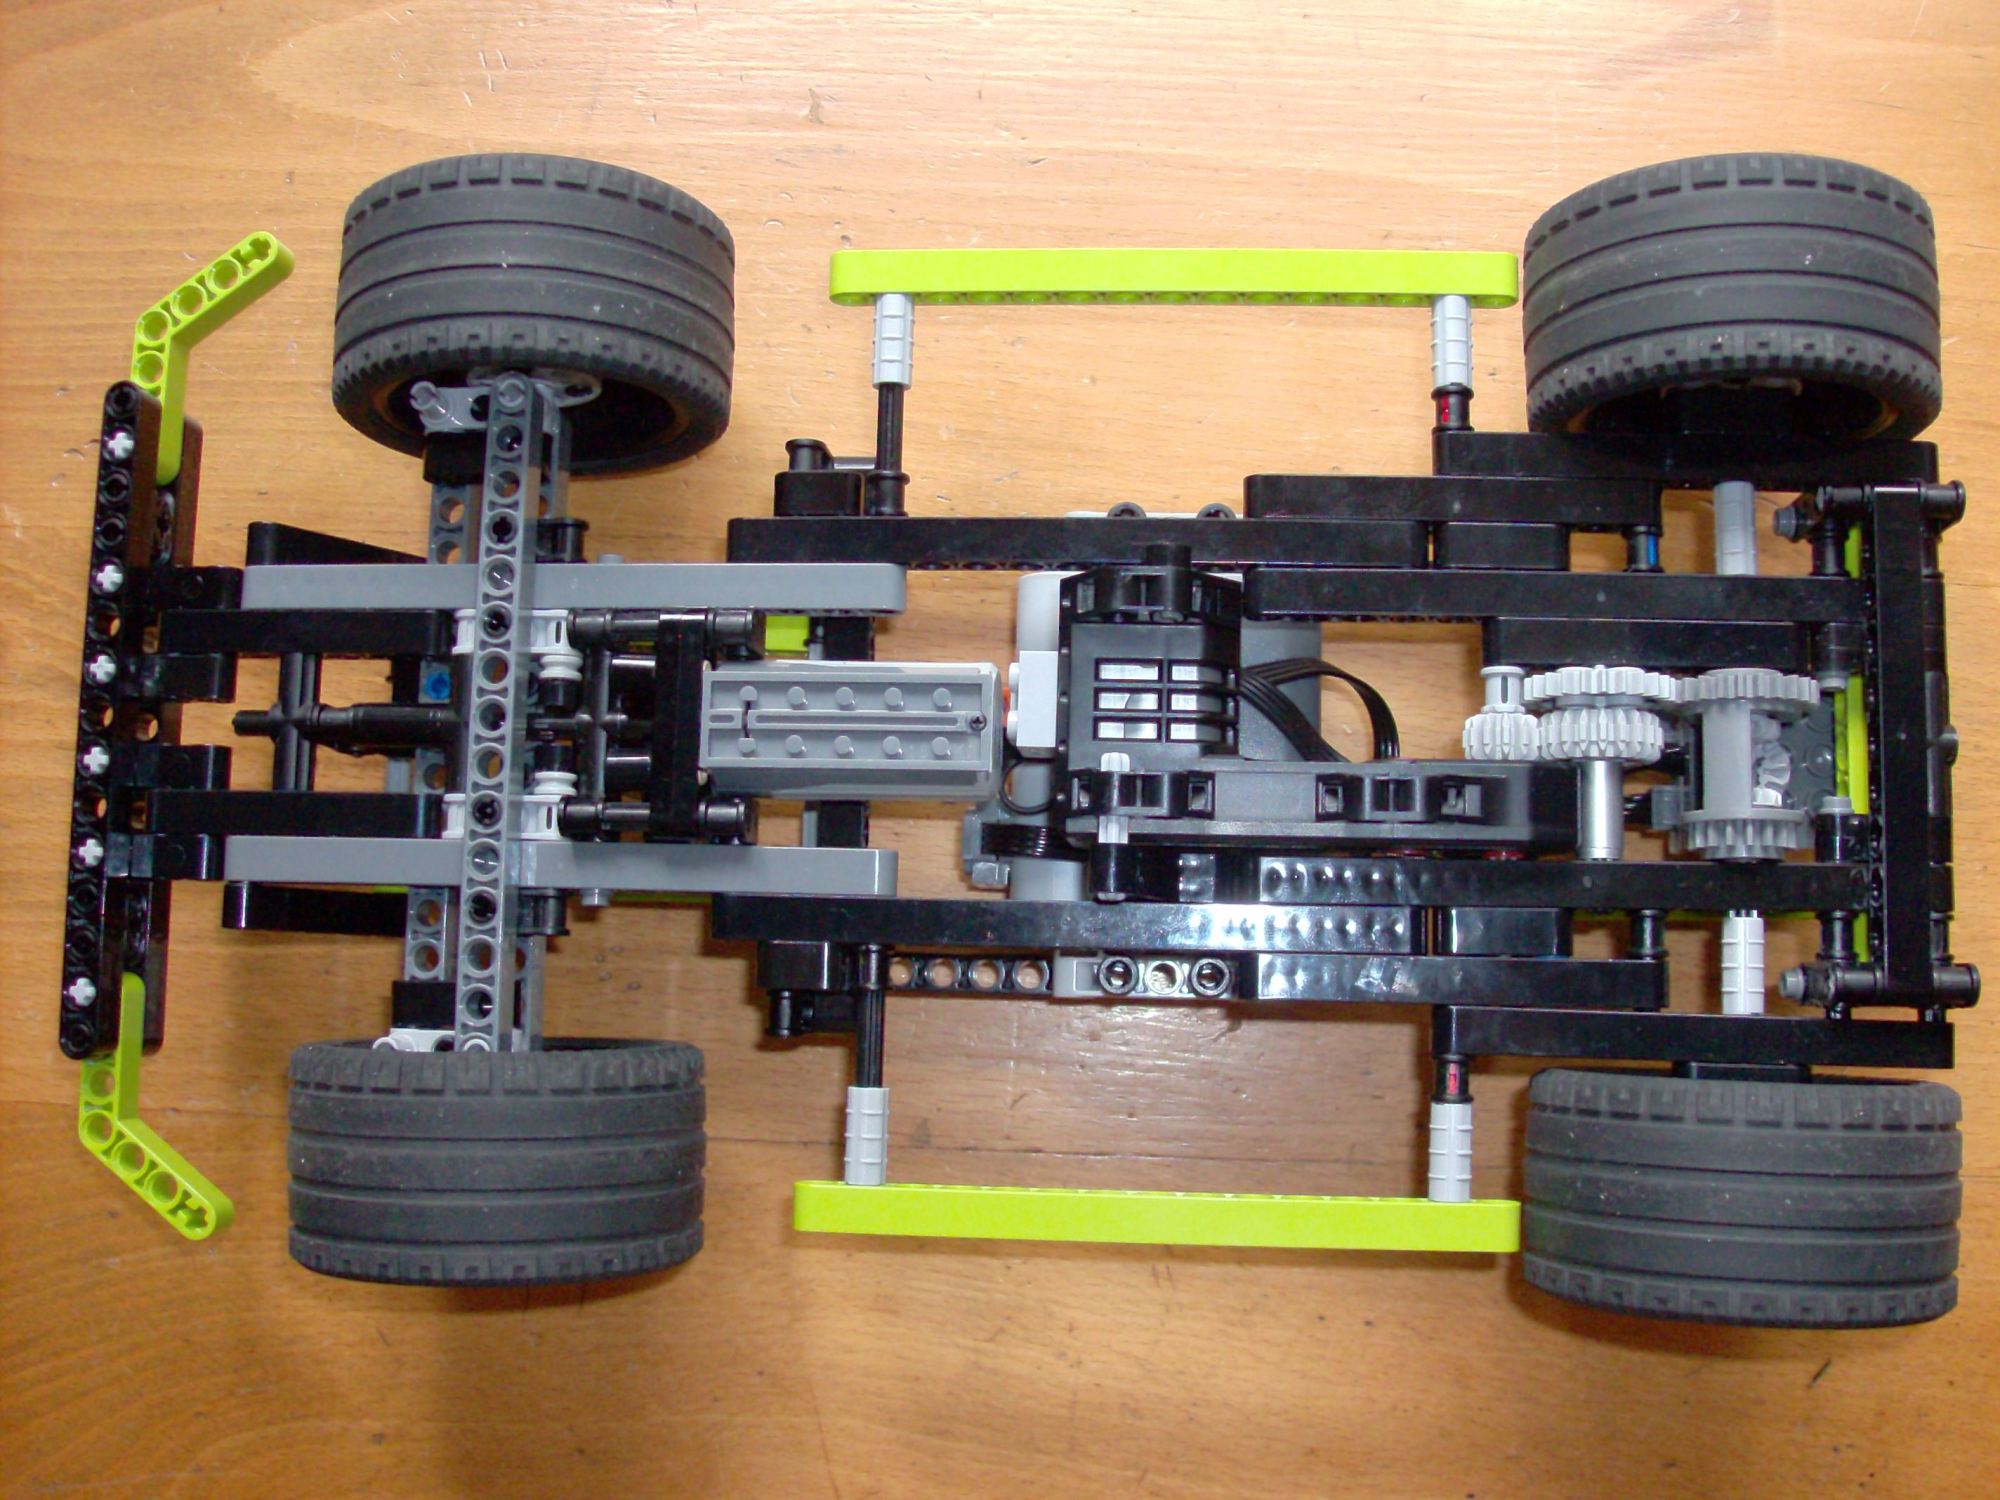 building an rc car